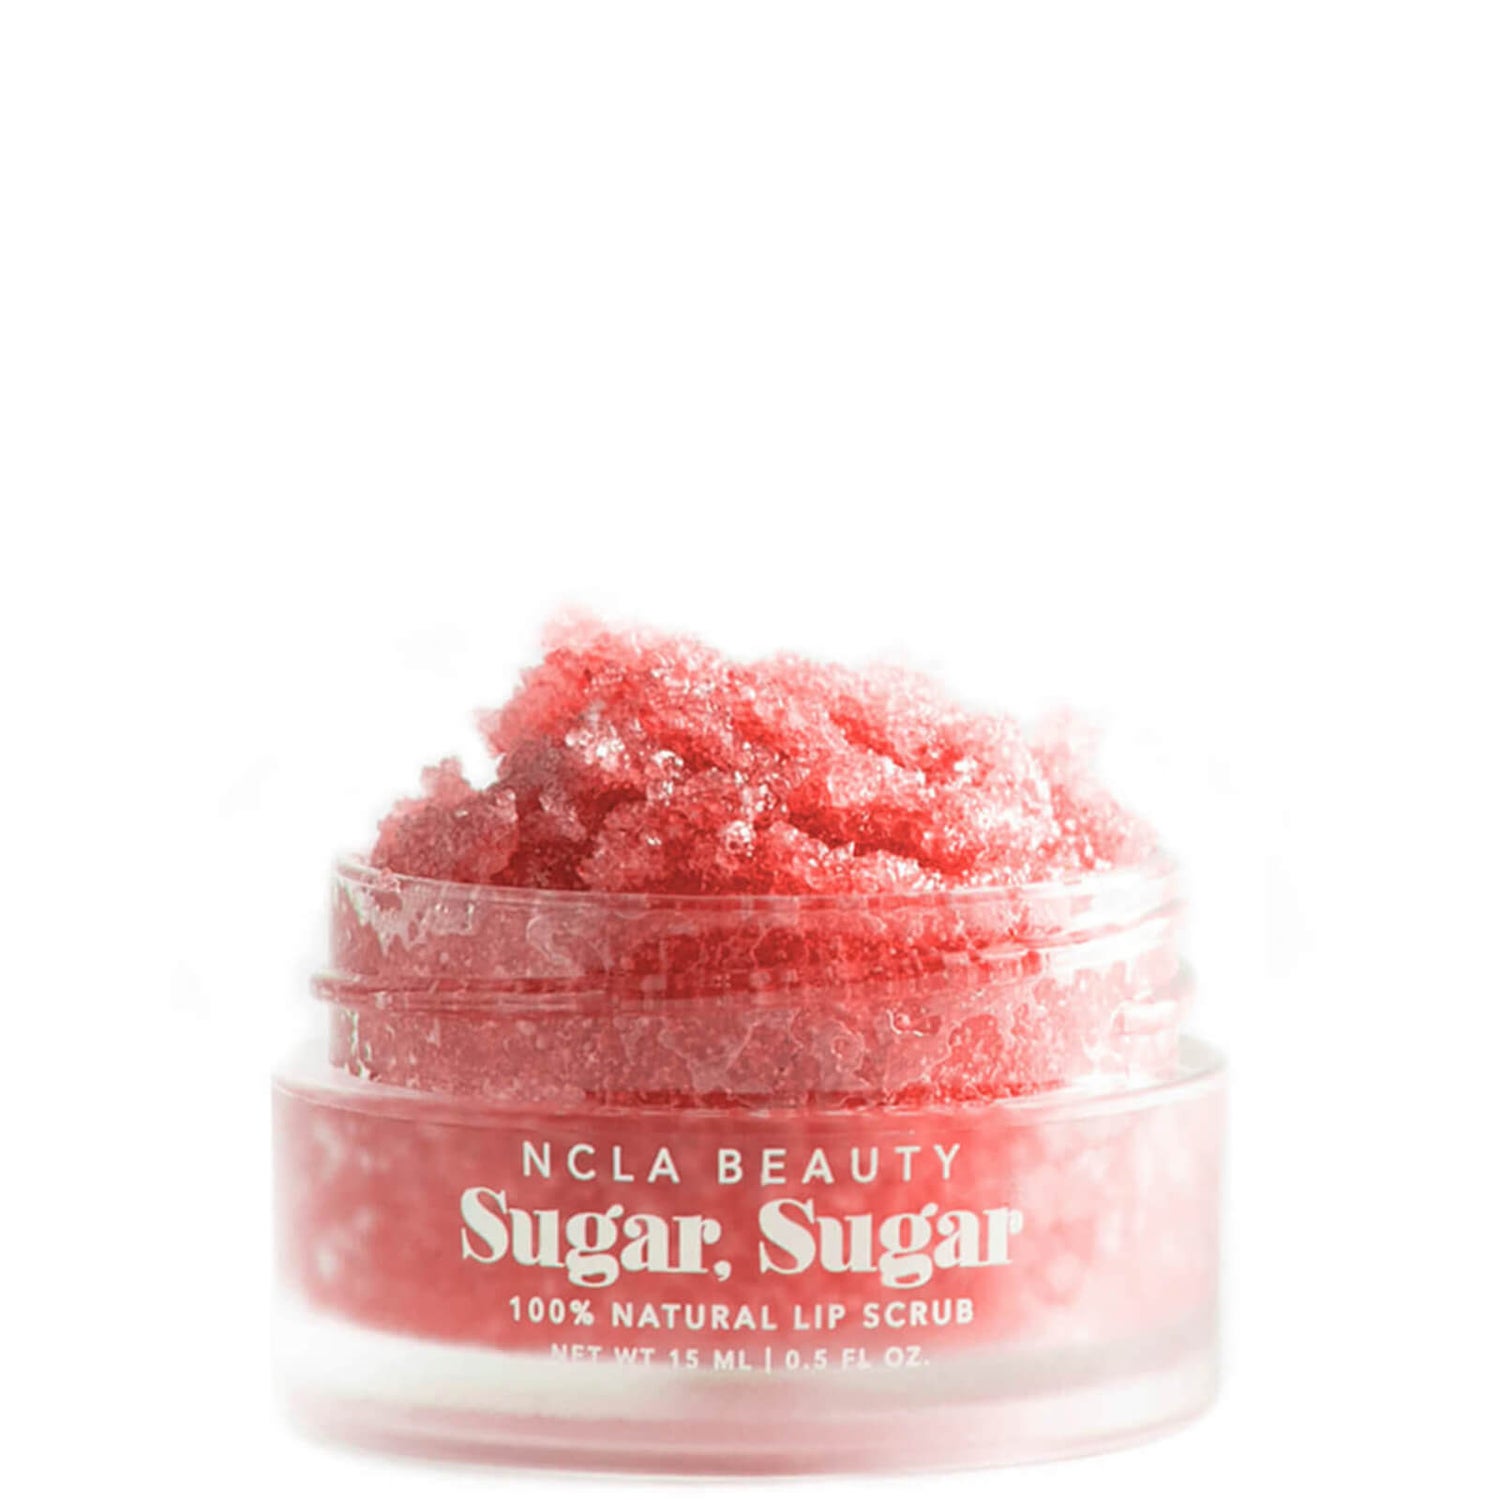 NCLA Beauty Sugar Sugar Watermelon Lip Scrub